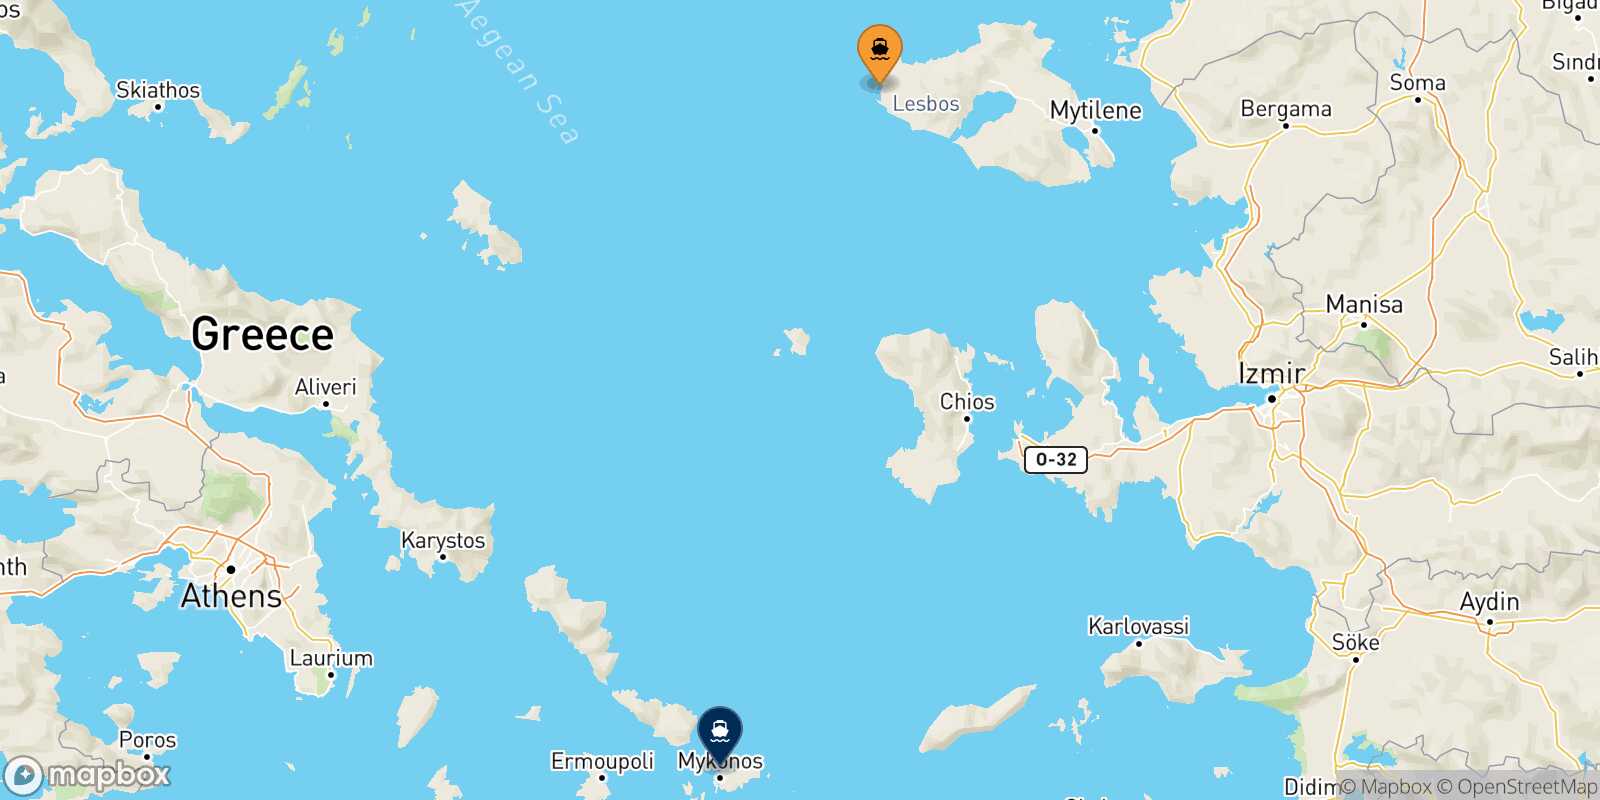 Sigri (Lesvos) Mykonos route map